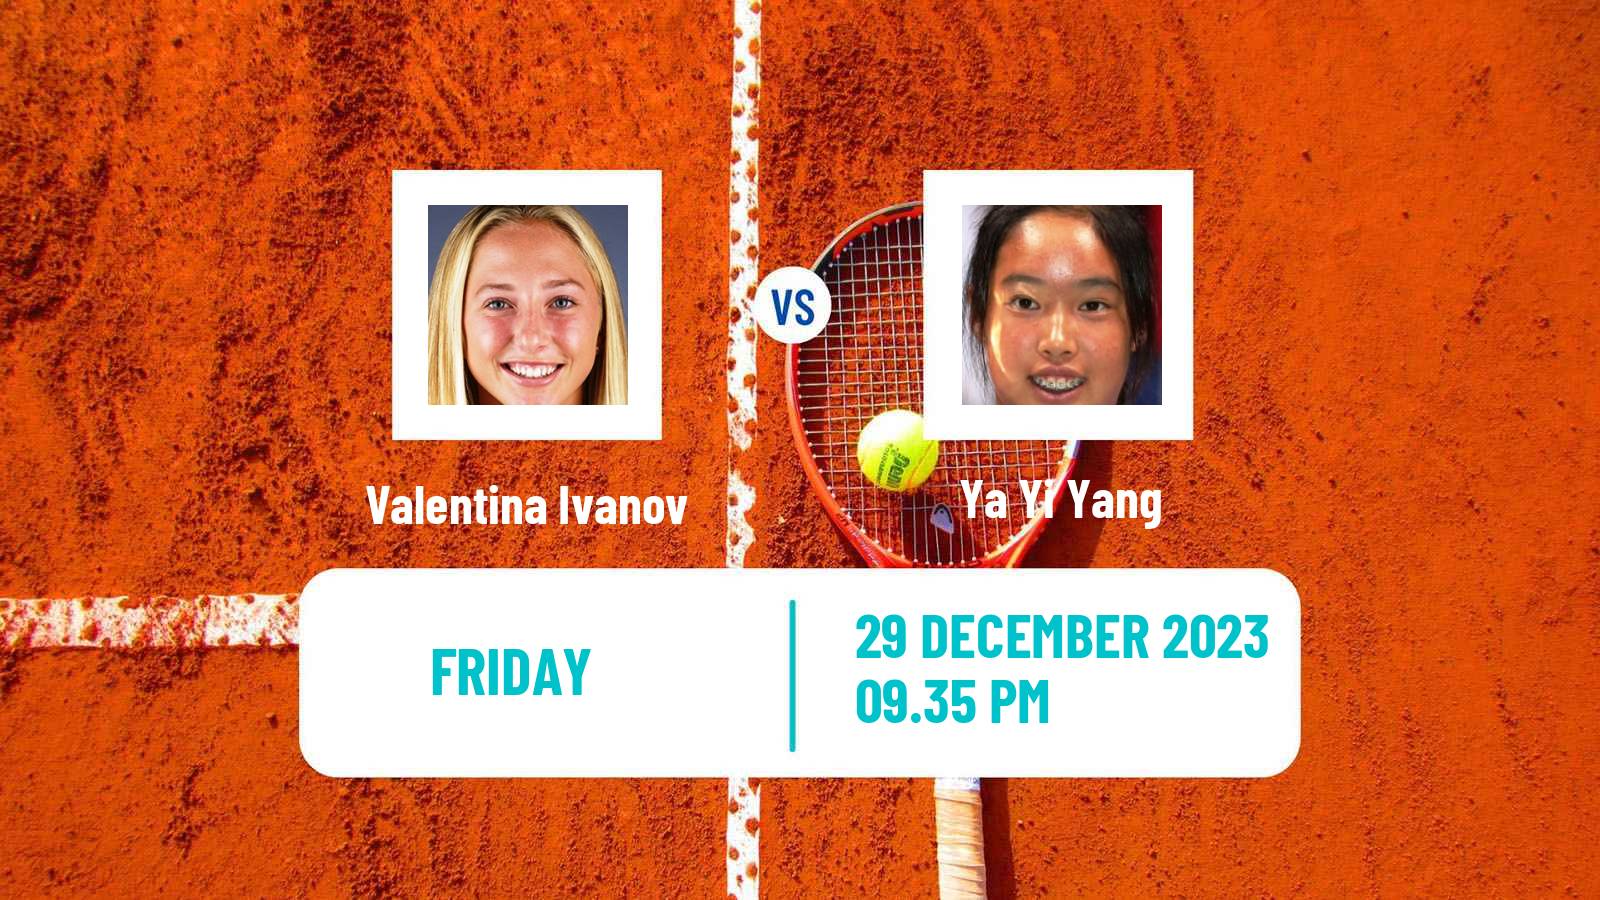 Tennis WTA Auckland Valentina Ivanov - Ya Yi Yang